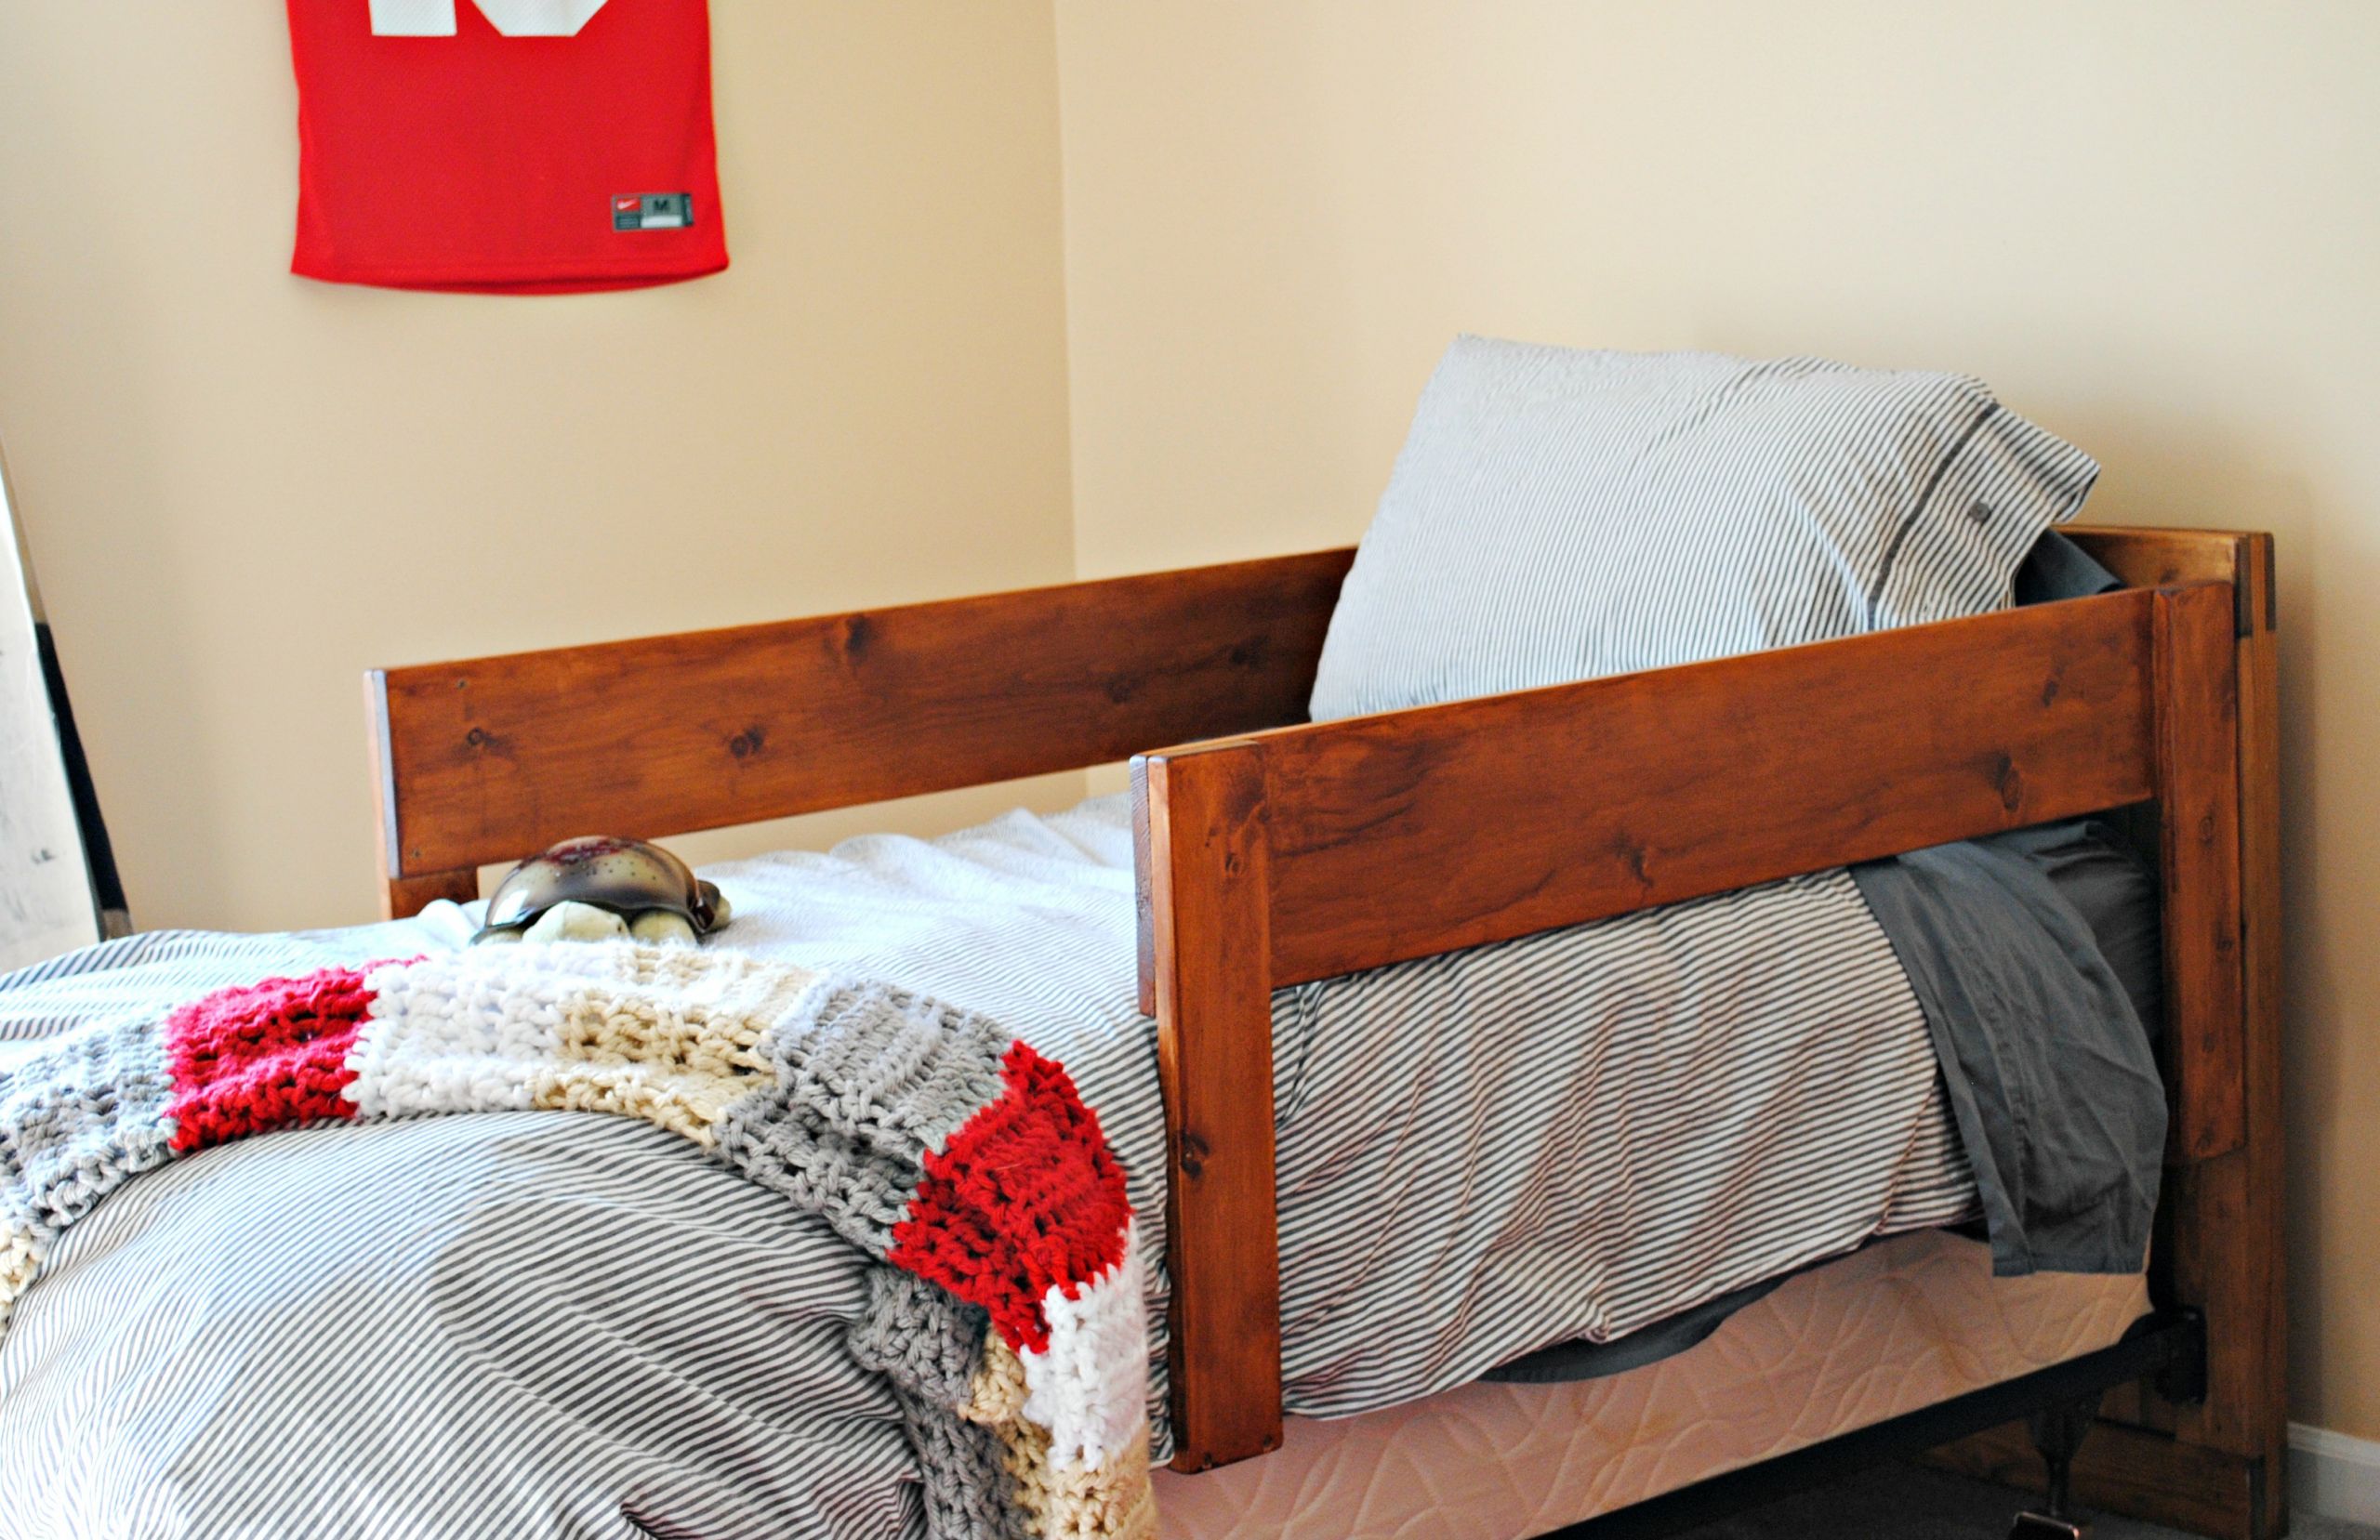 DIY Toddler Bed Rails
 DIY Toddler Bed Rails Place in Progress